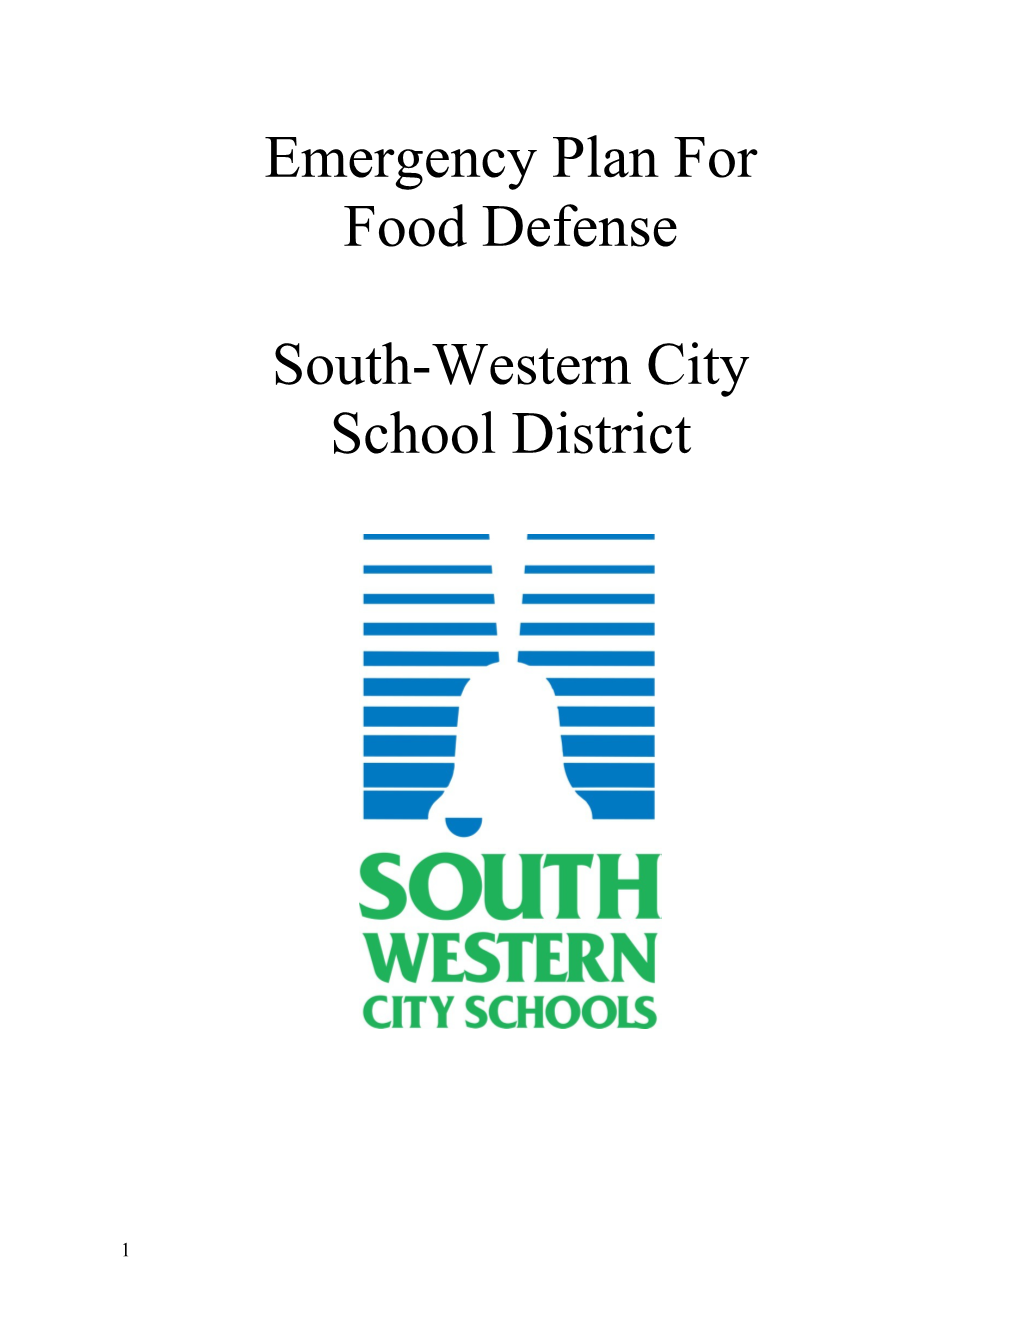 South-Western City Schools Emergency Plan for Food Defense